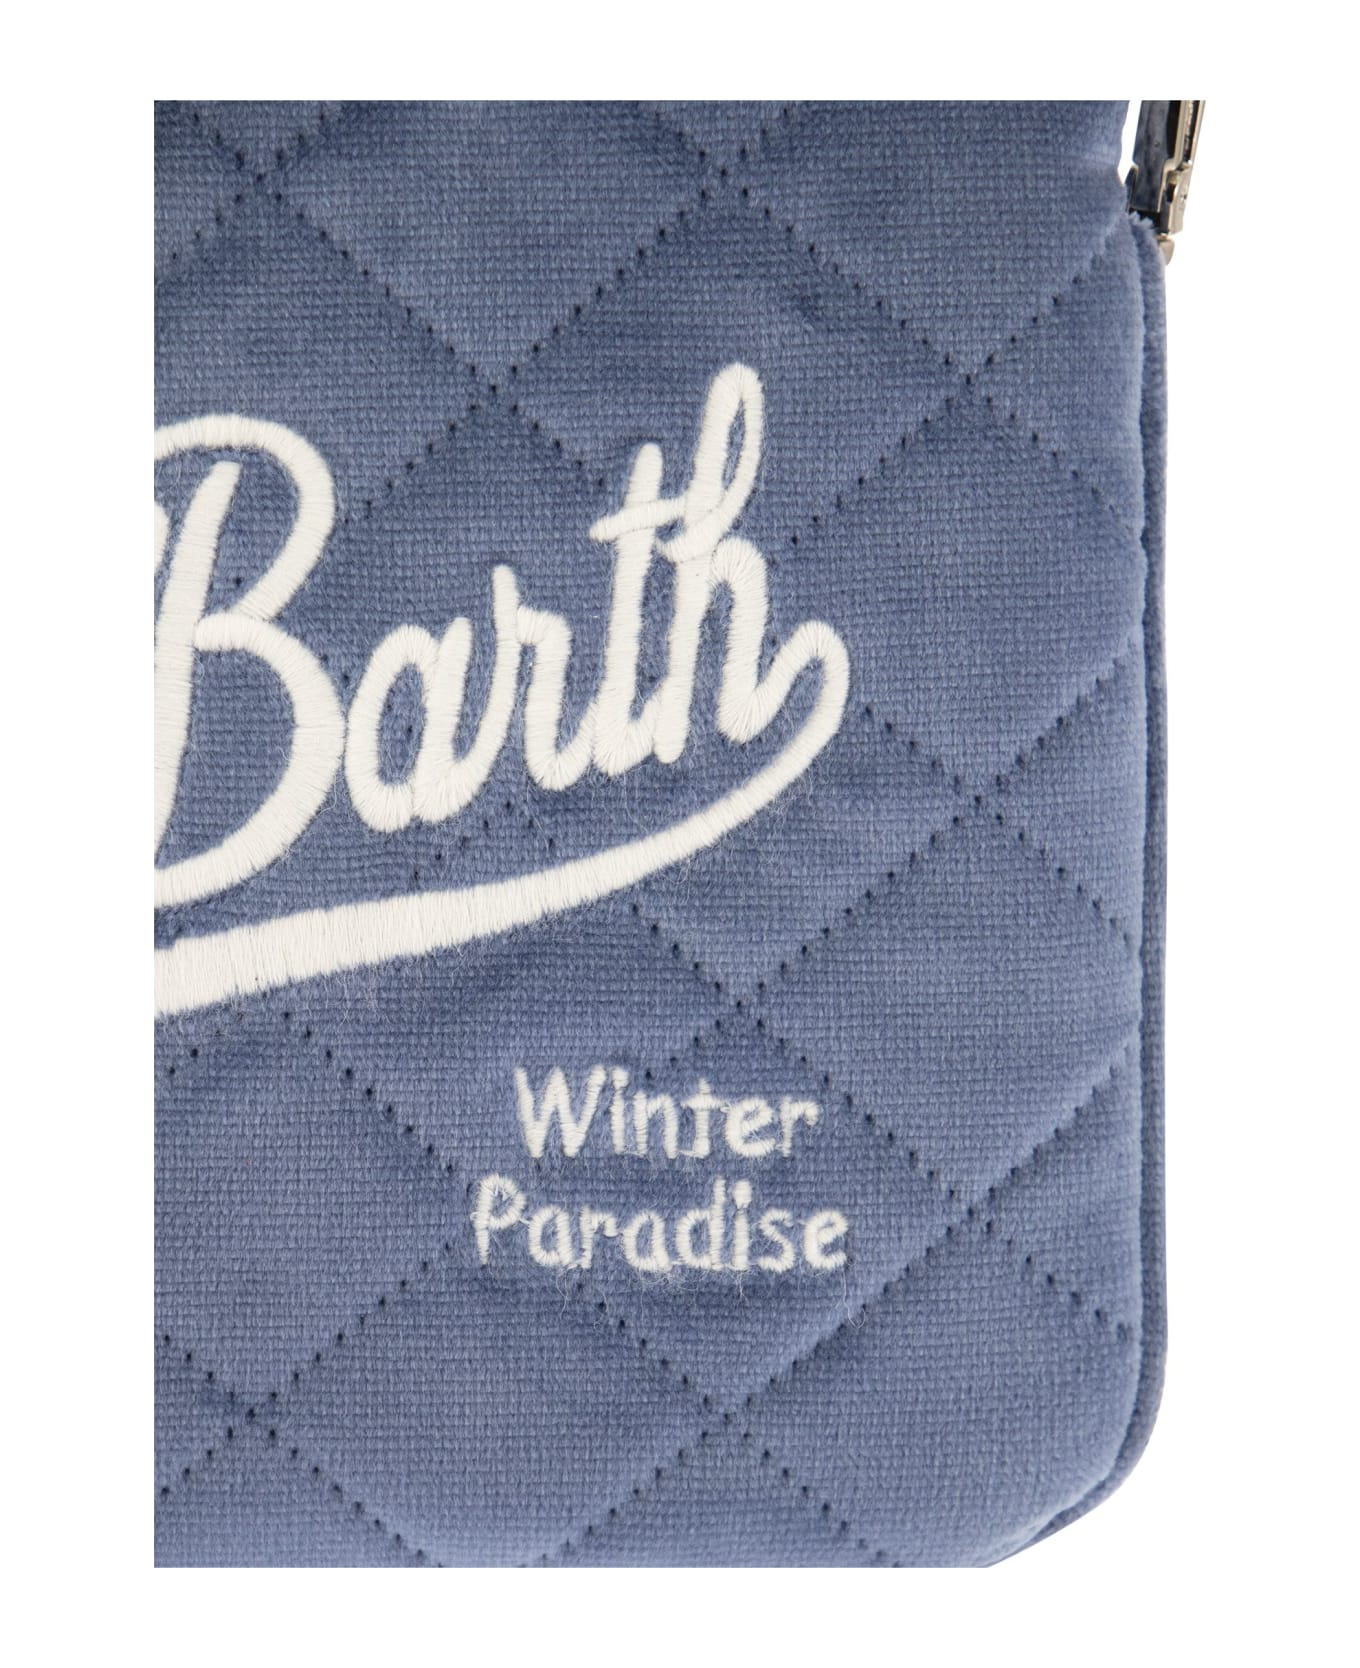 MC2 Saint Barth Pochette Bag With Shoulder Strap - Light Blue